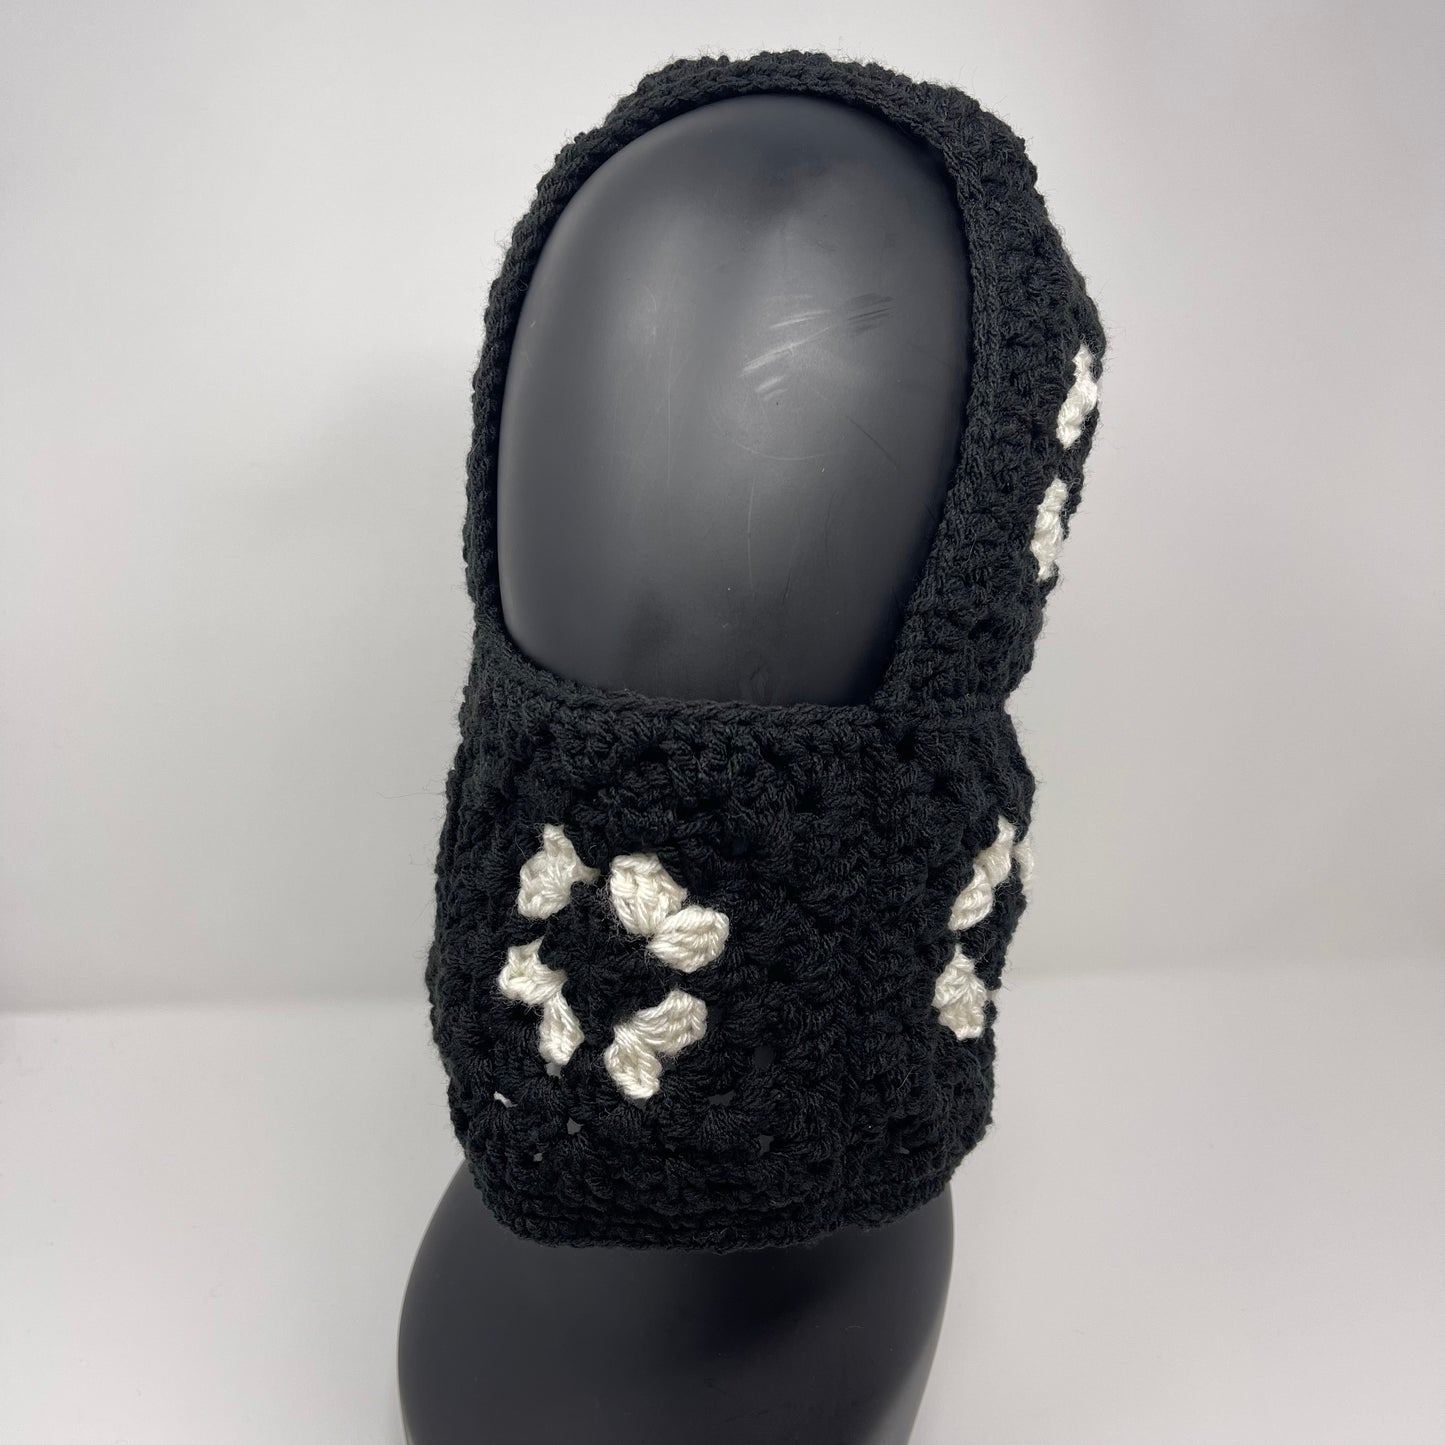 Crochet Balaclava - Black with White Flowers